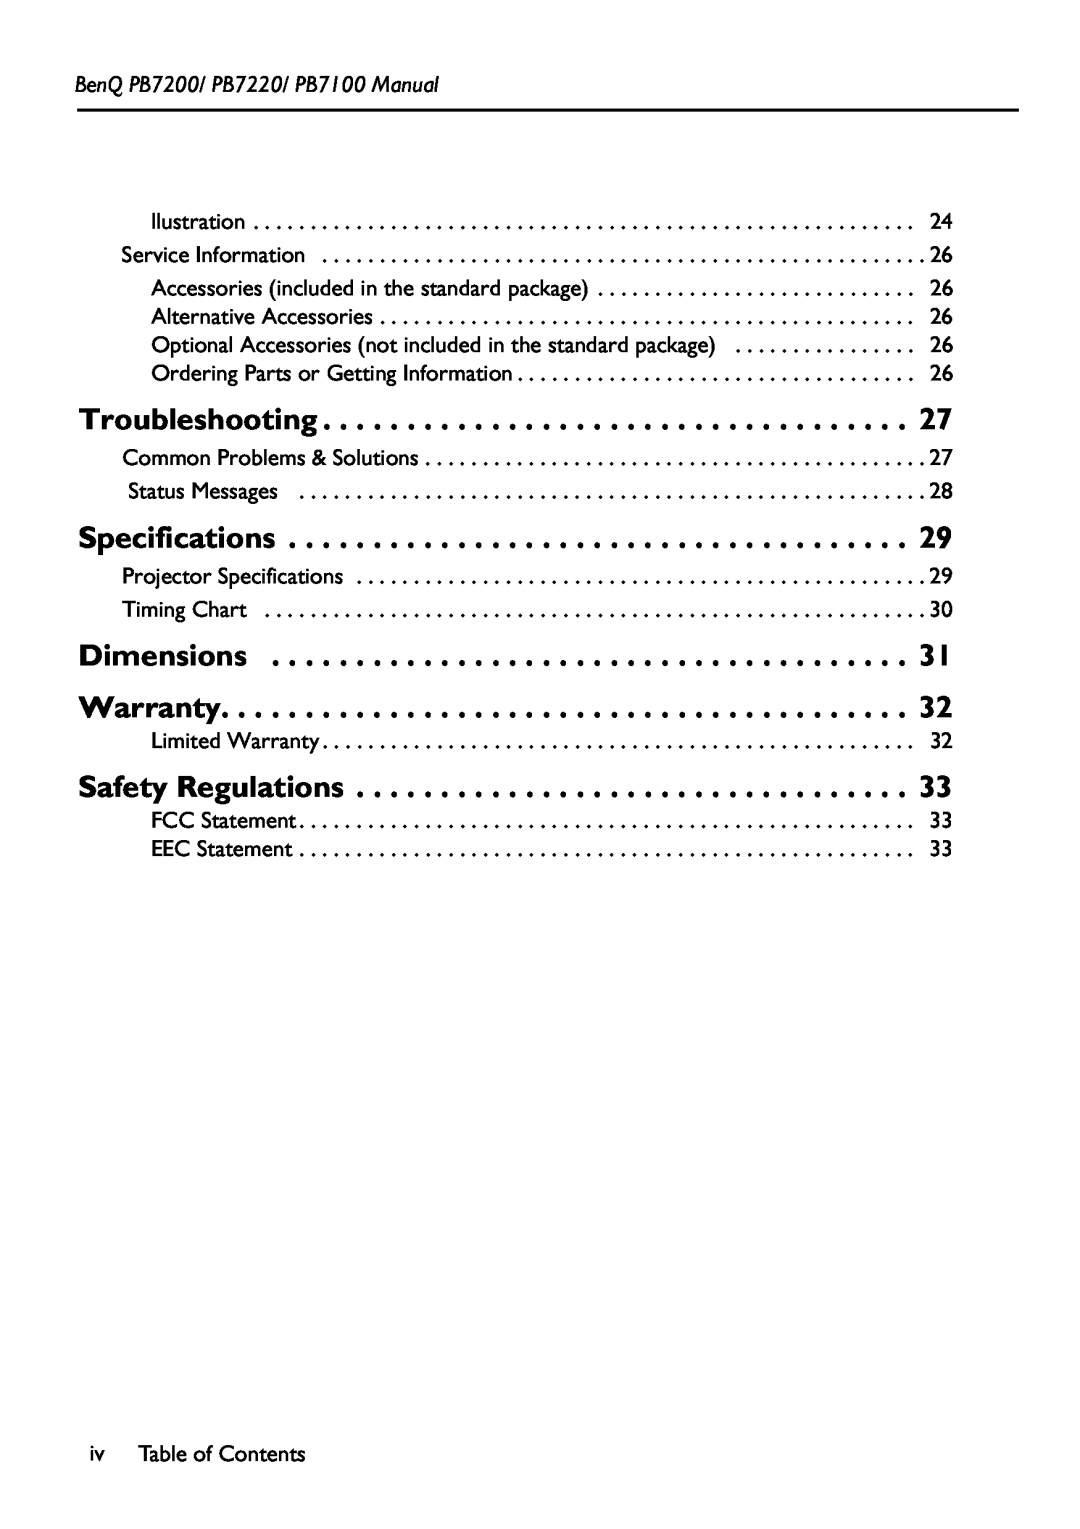 BenQ manual Troubleshooting, Specifications, Safety Regulations, BenQ PB7200/ PB7220/ PB7100 Manual 